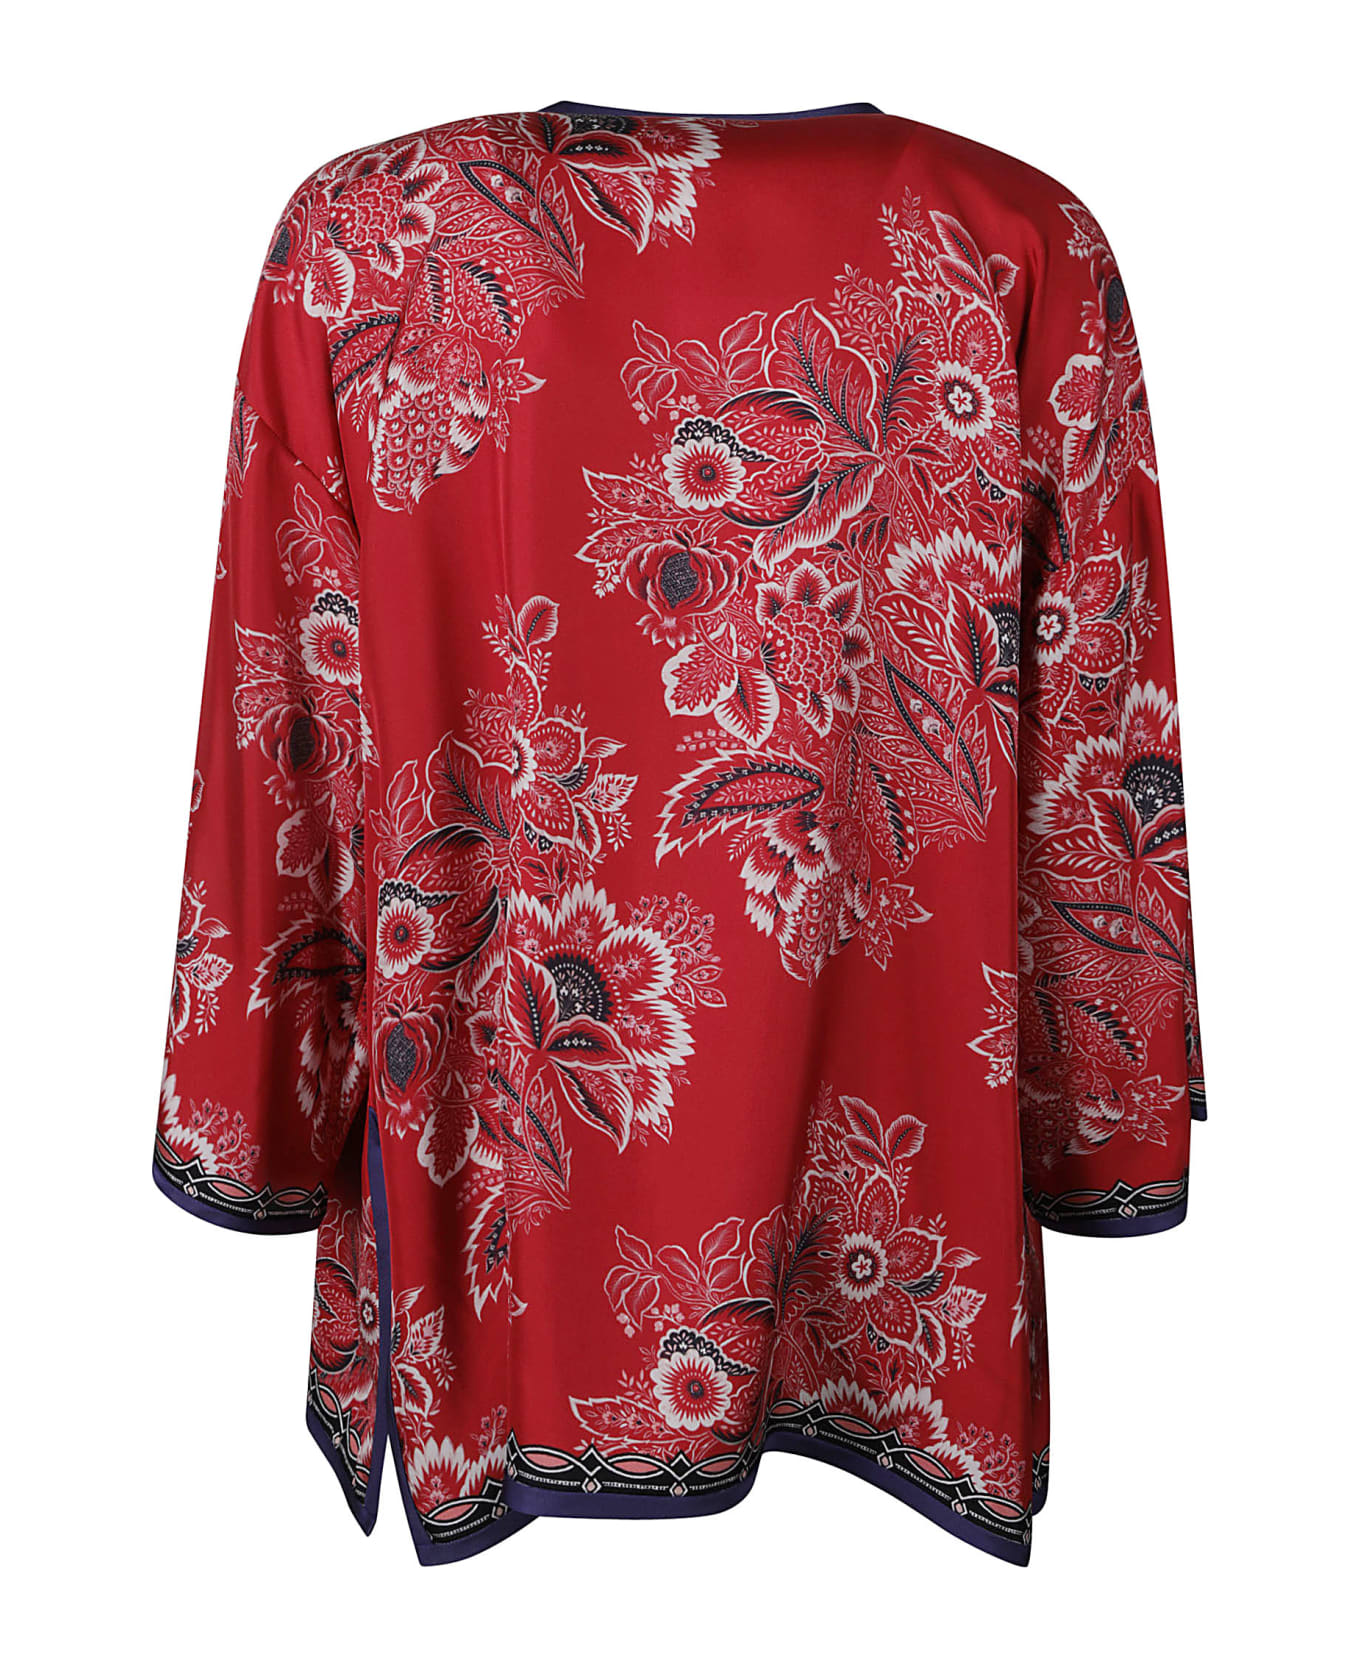 Etro Floral Printed Satin Jacket - Red/Multicolor